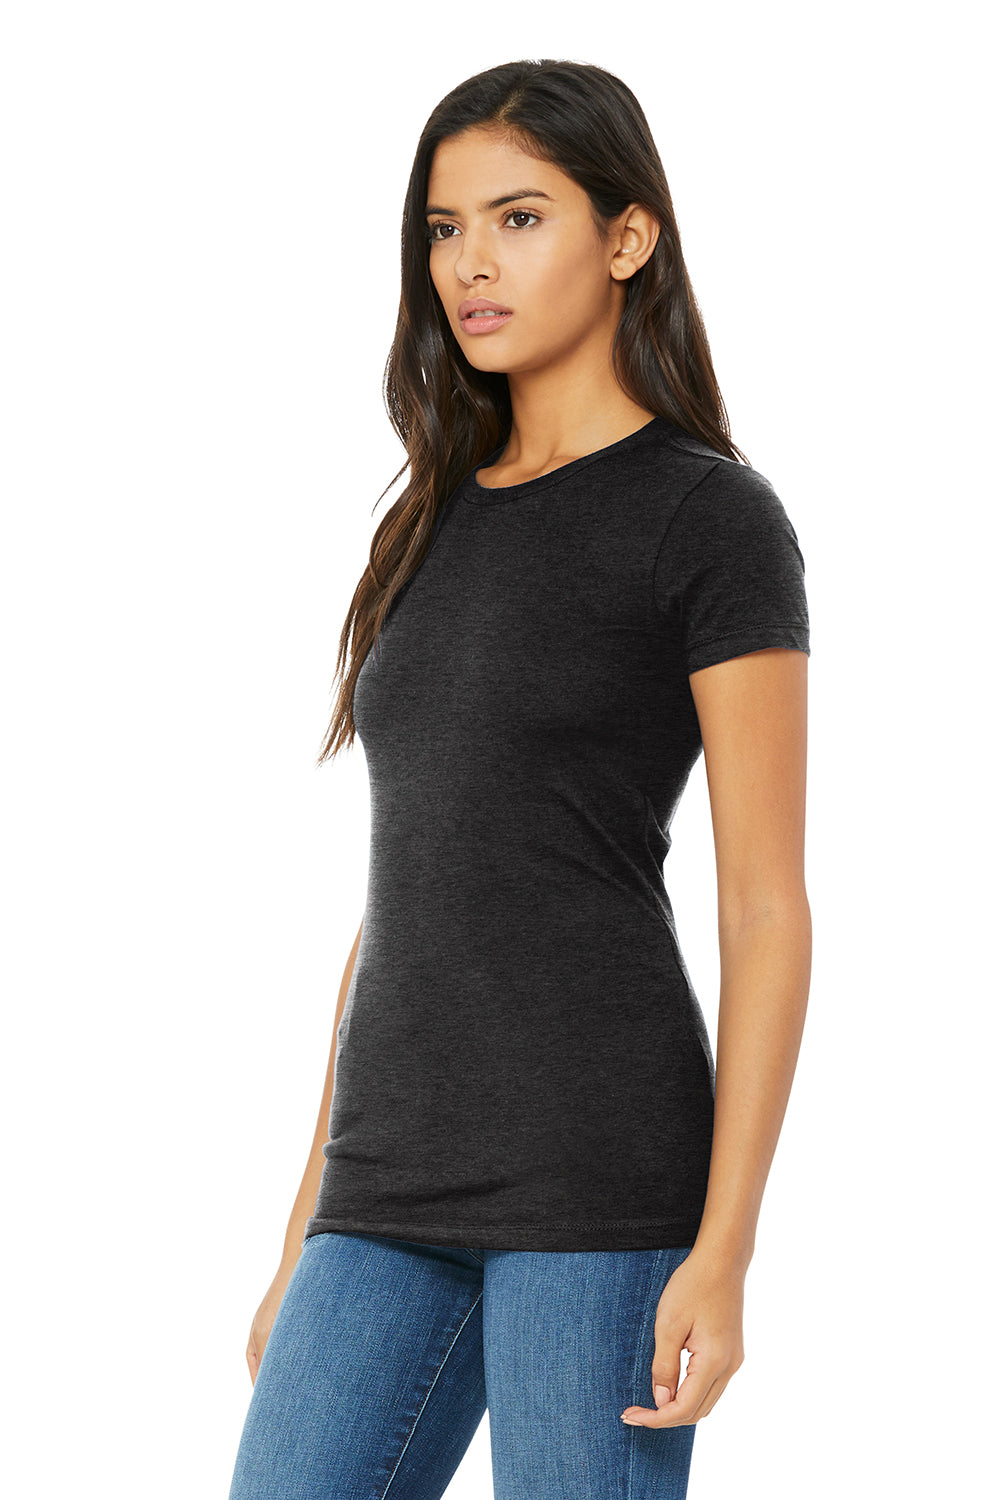 Bella + Canvas BC6004/6004 Womens The Favorite Short Sleeve Crewneck T-Shirt Heather Black Model 3Q